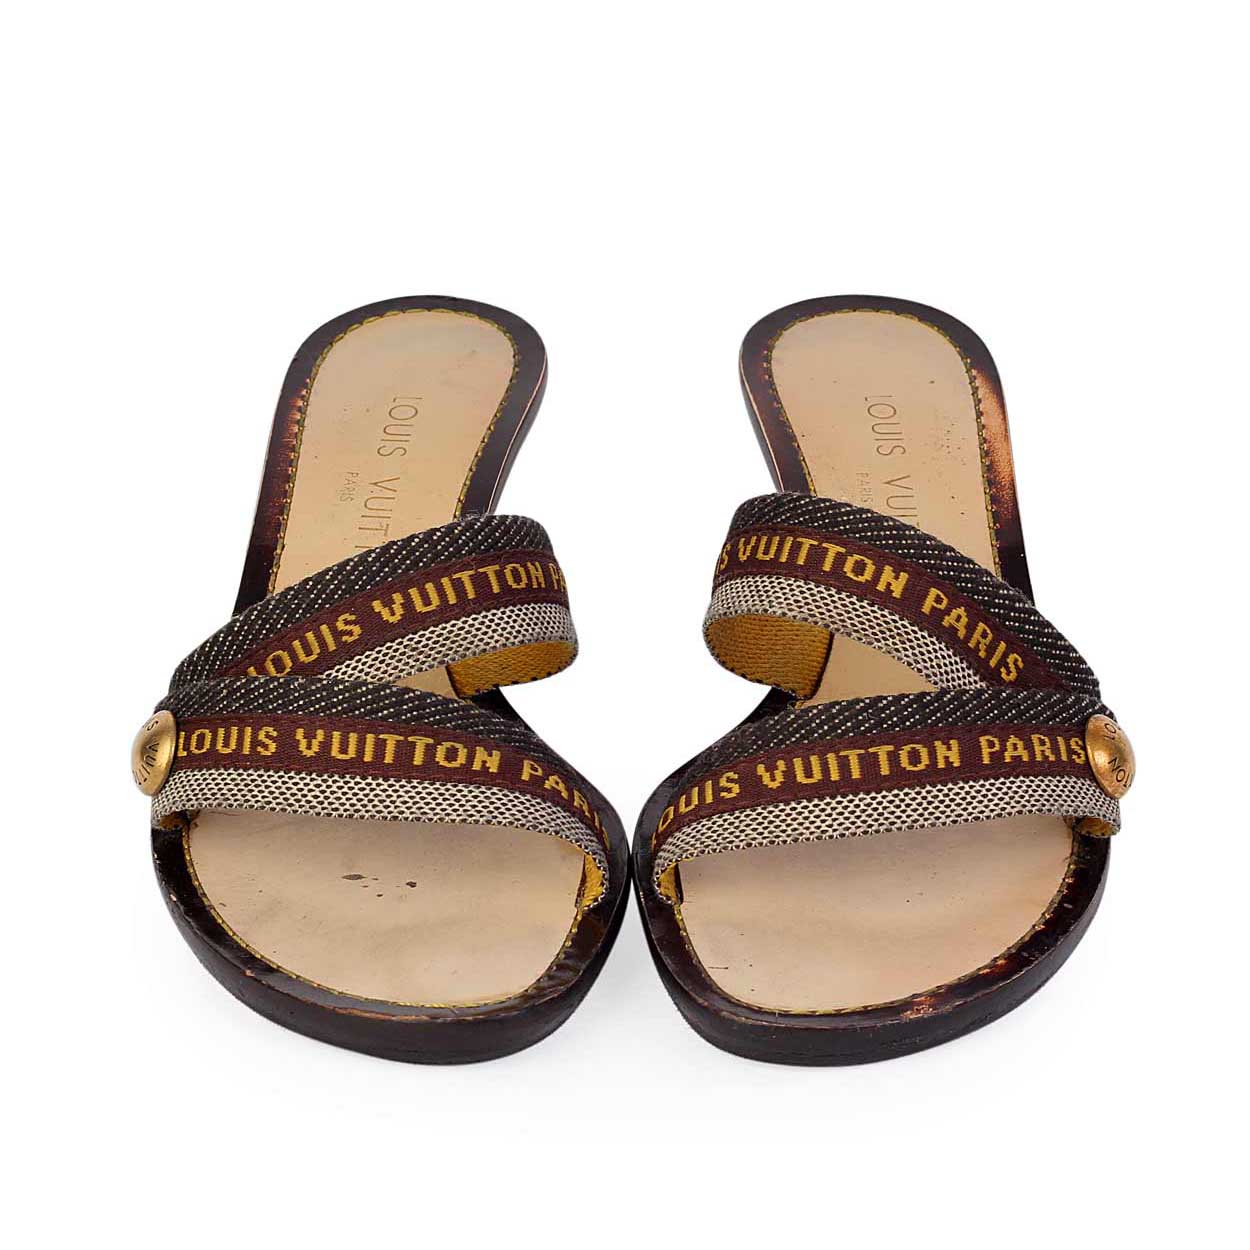 LOUIS VUITTON Cruise Wooden Kitten Heels - S: 36 (3.5) - Luxity